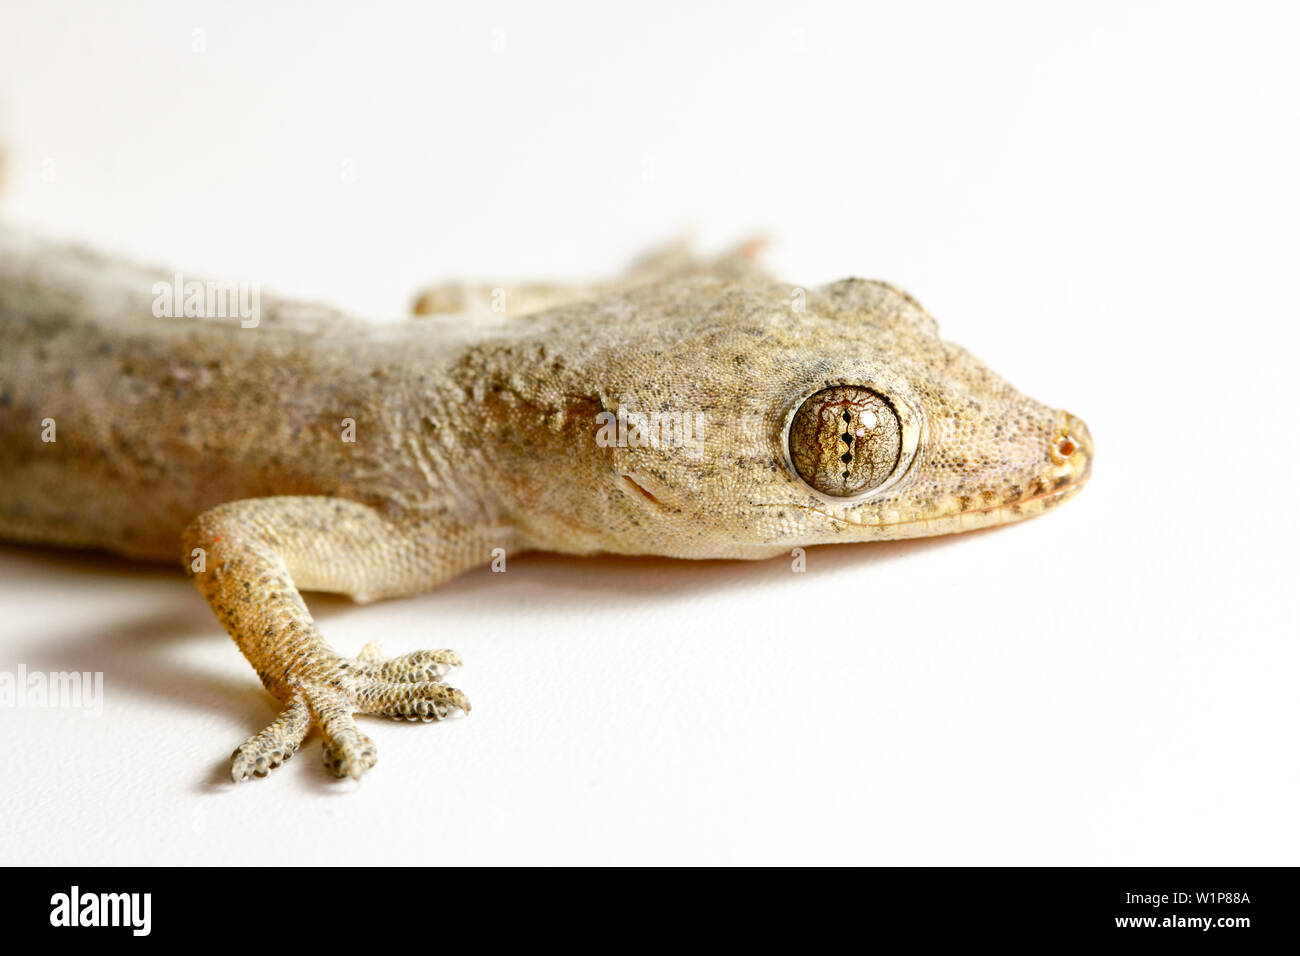 Closeup Asian house gecko (Hemidactylus sp.) on white background Stock Photo